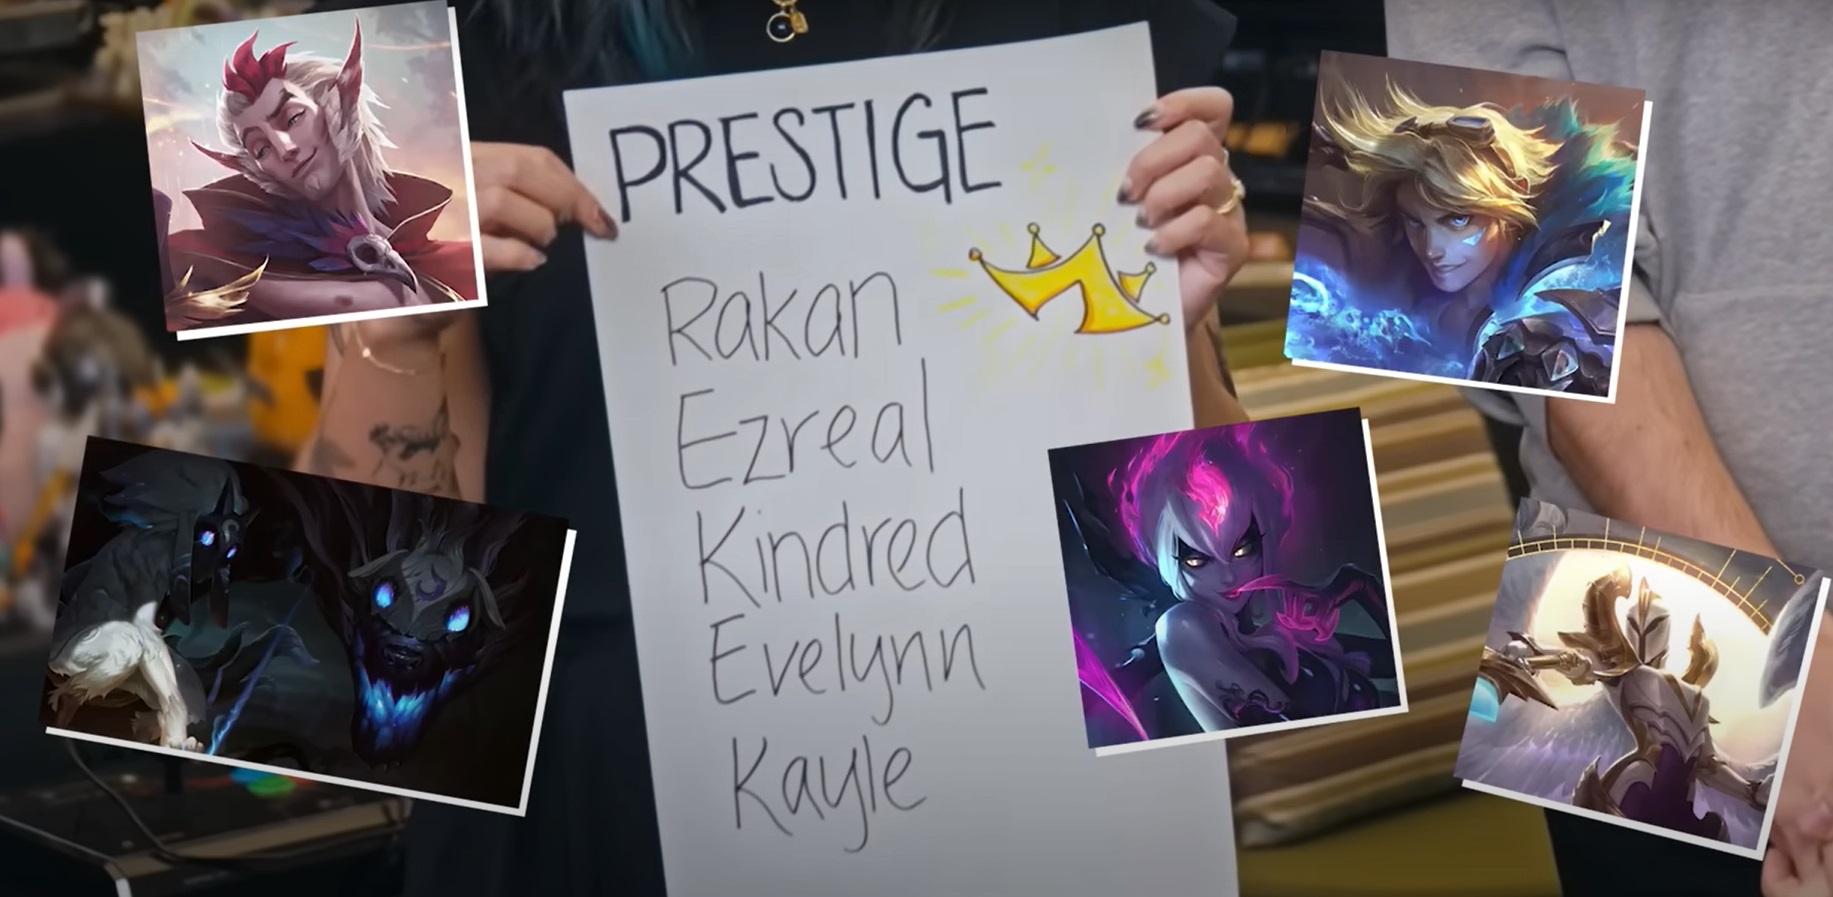 Prestige skin for champions including Kayle